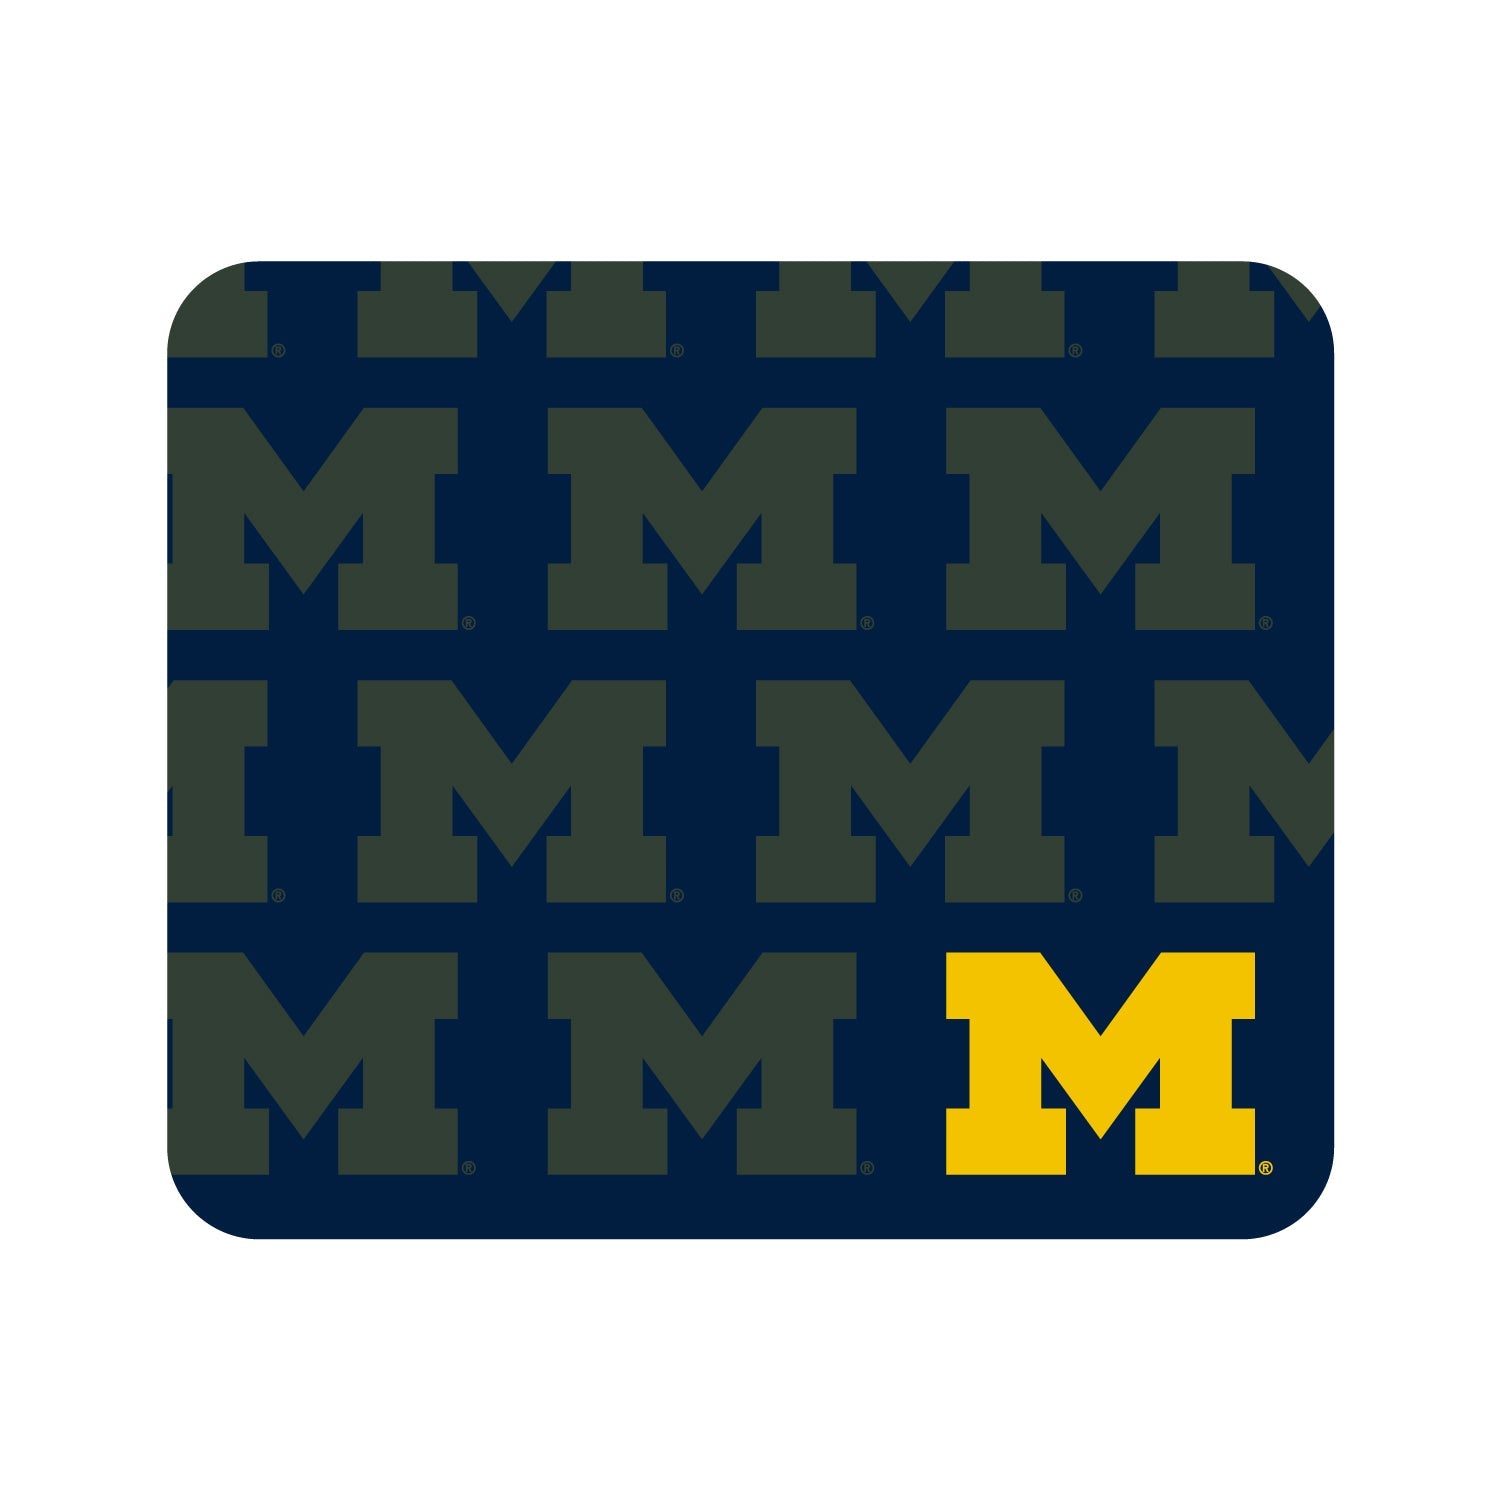 University of Michigan V2 Mousepad, Mascot Repeat V1